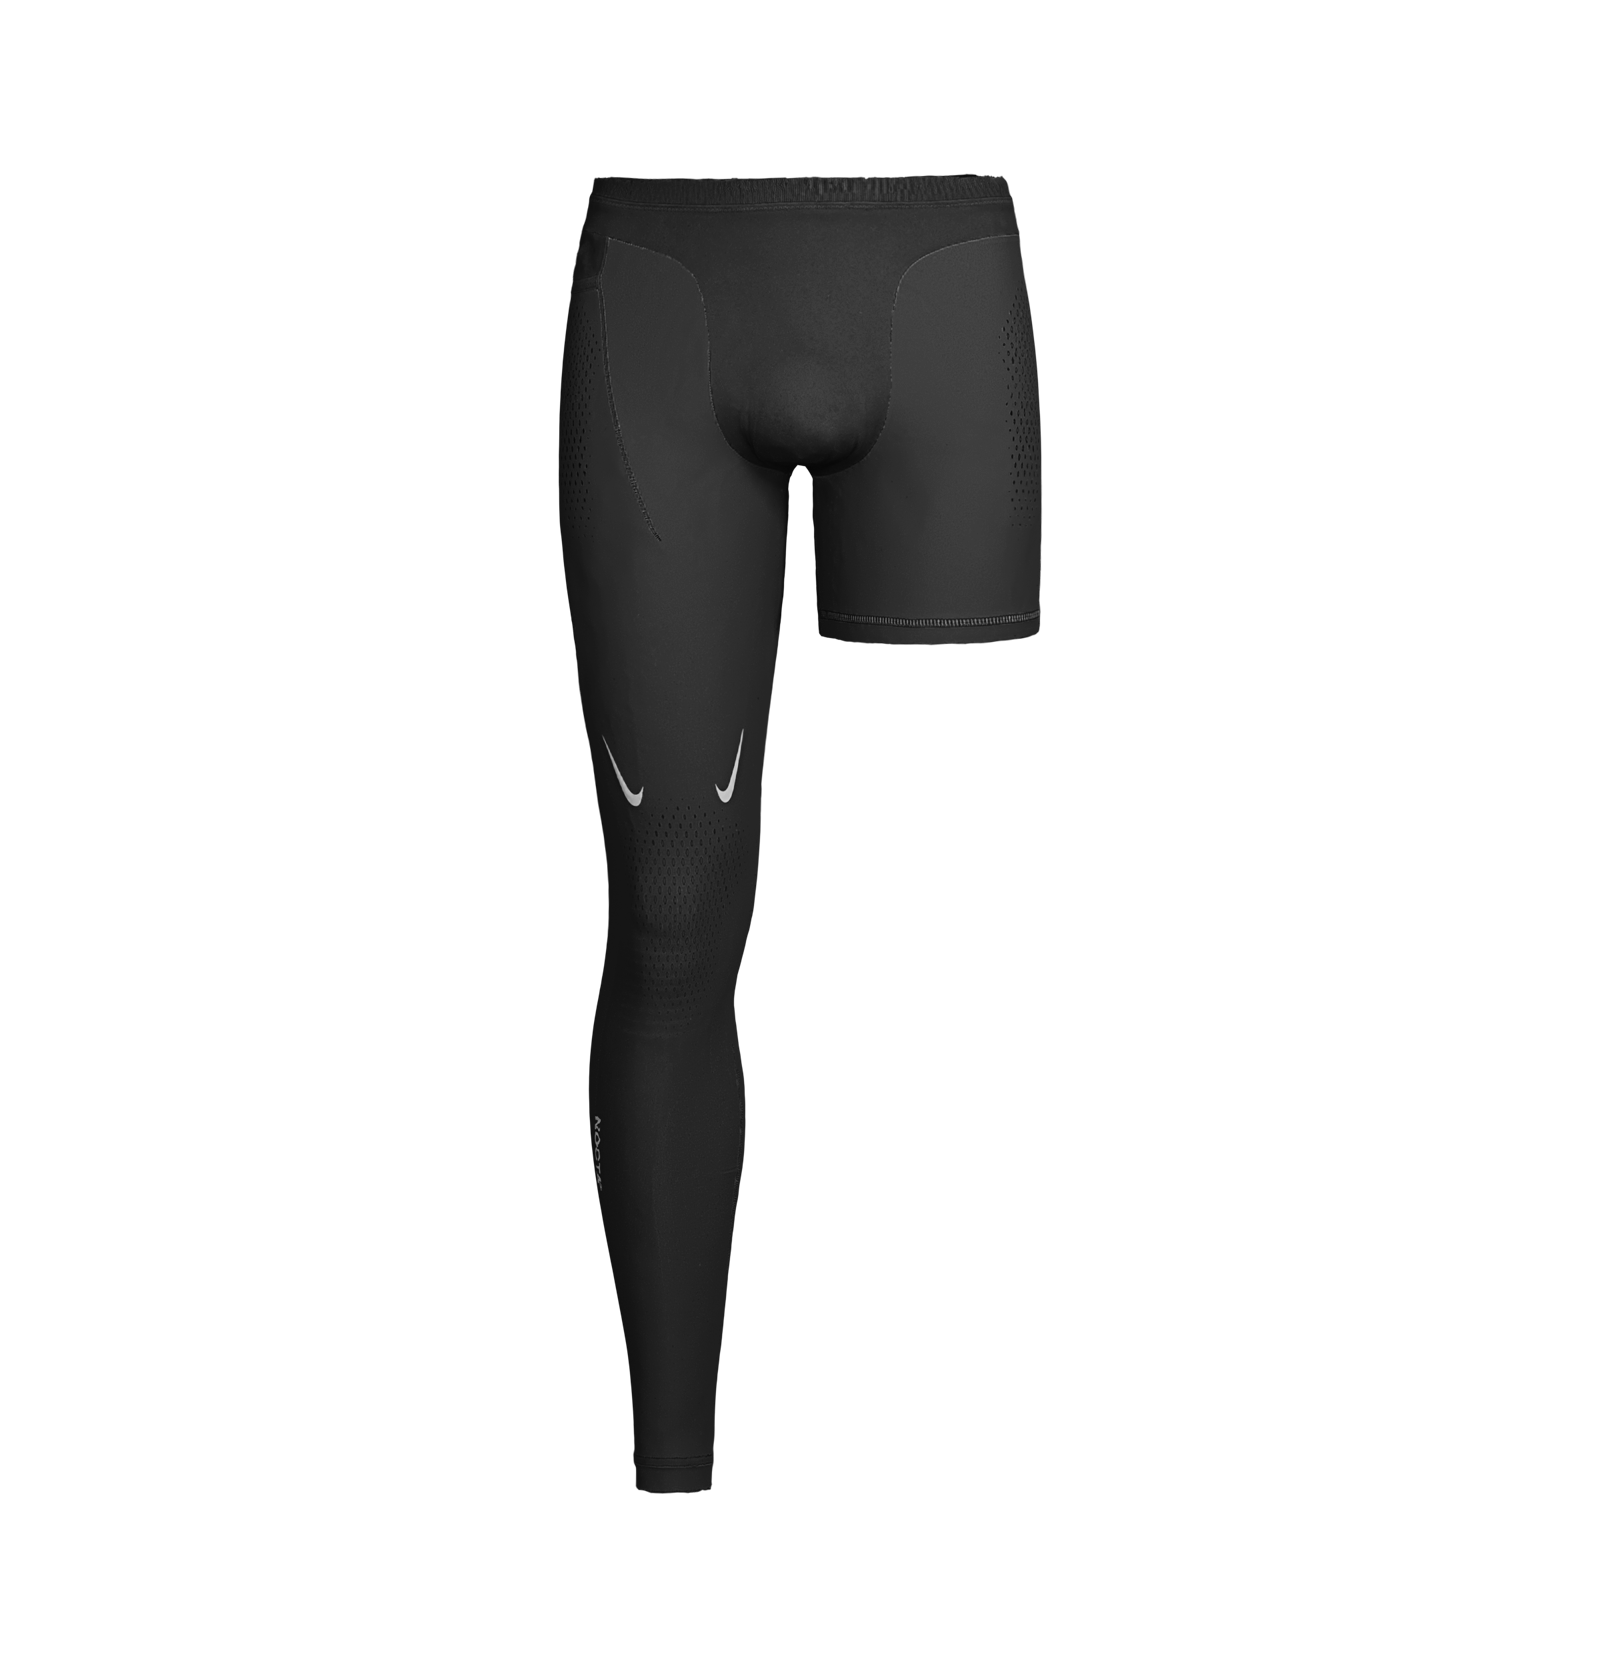 Nike x Nocta Basketball Single Leg Tights Right